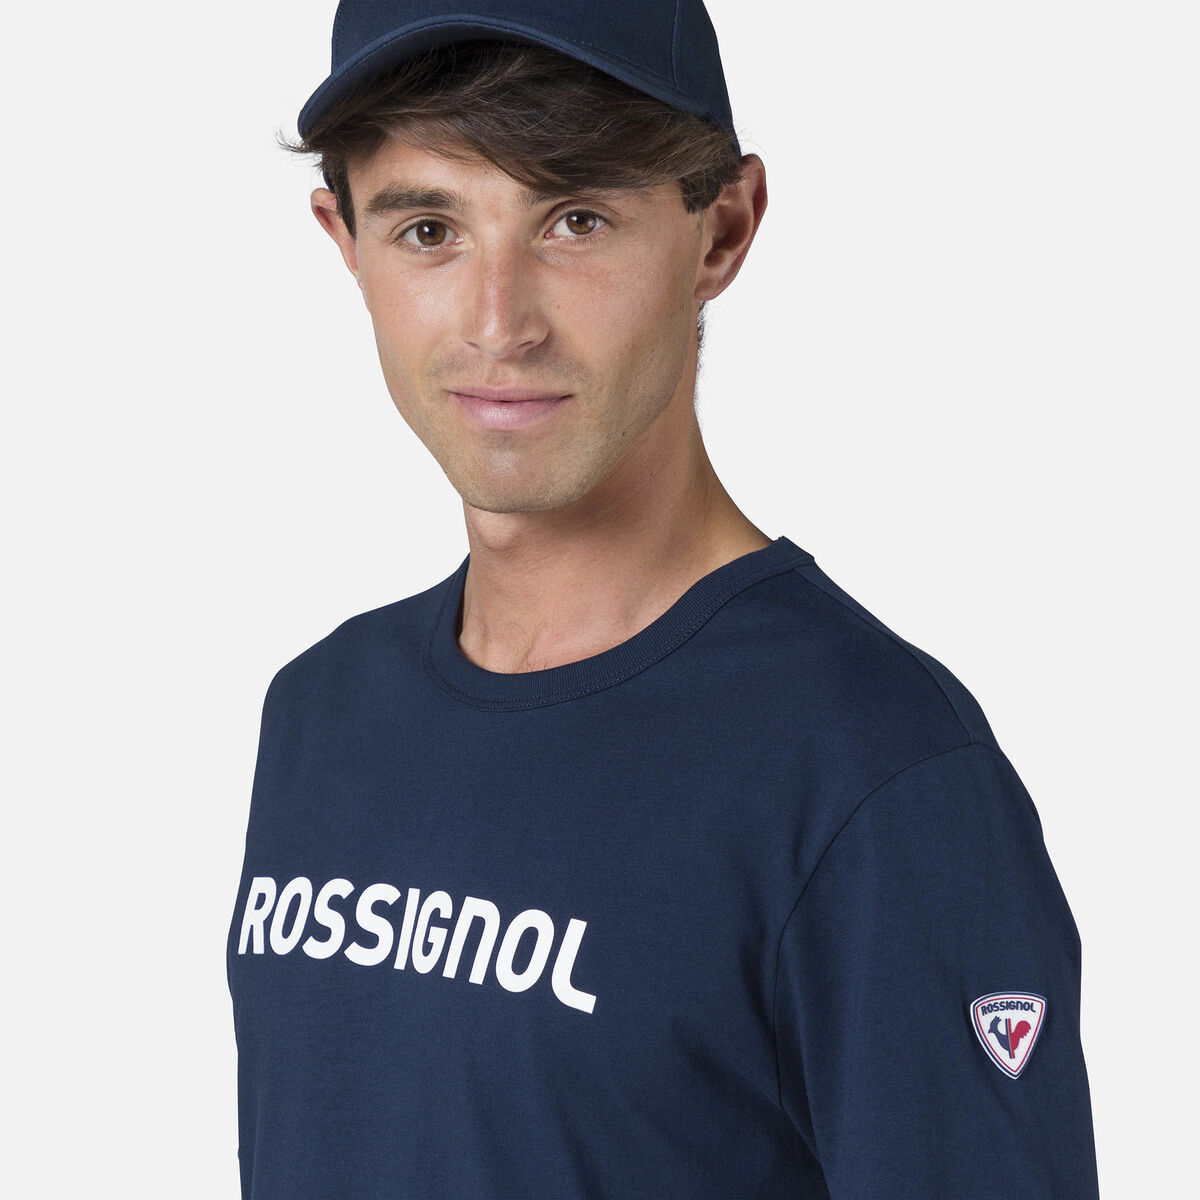 Rossignol Herren-T-Shirt Rossignol blue